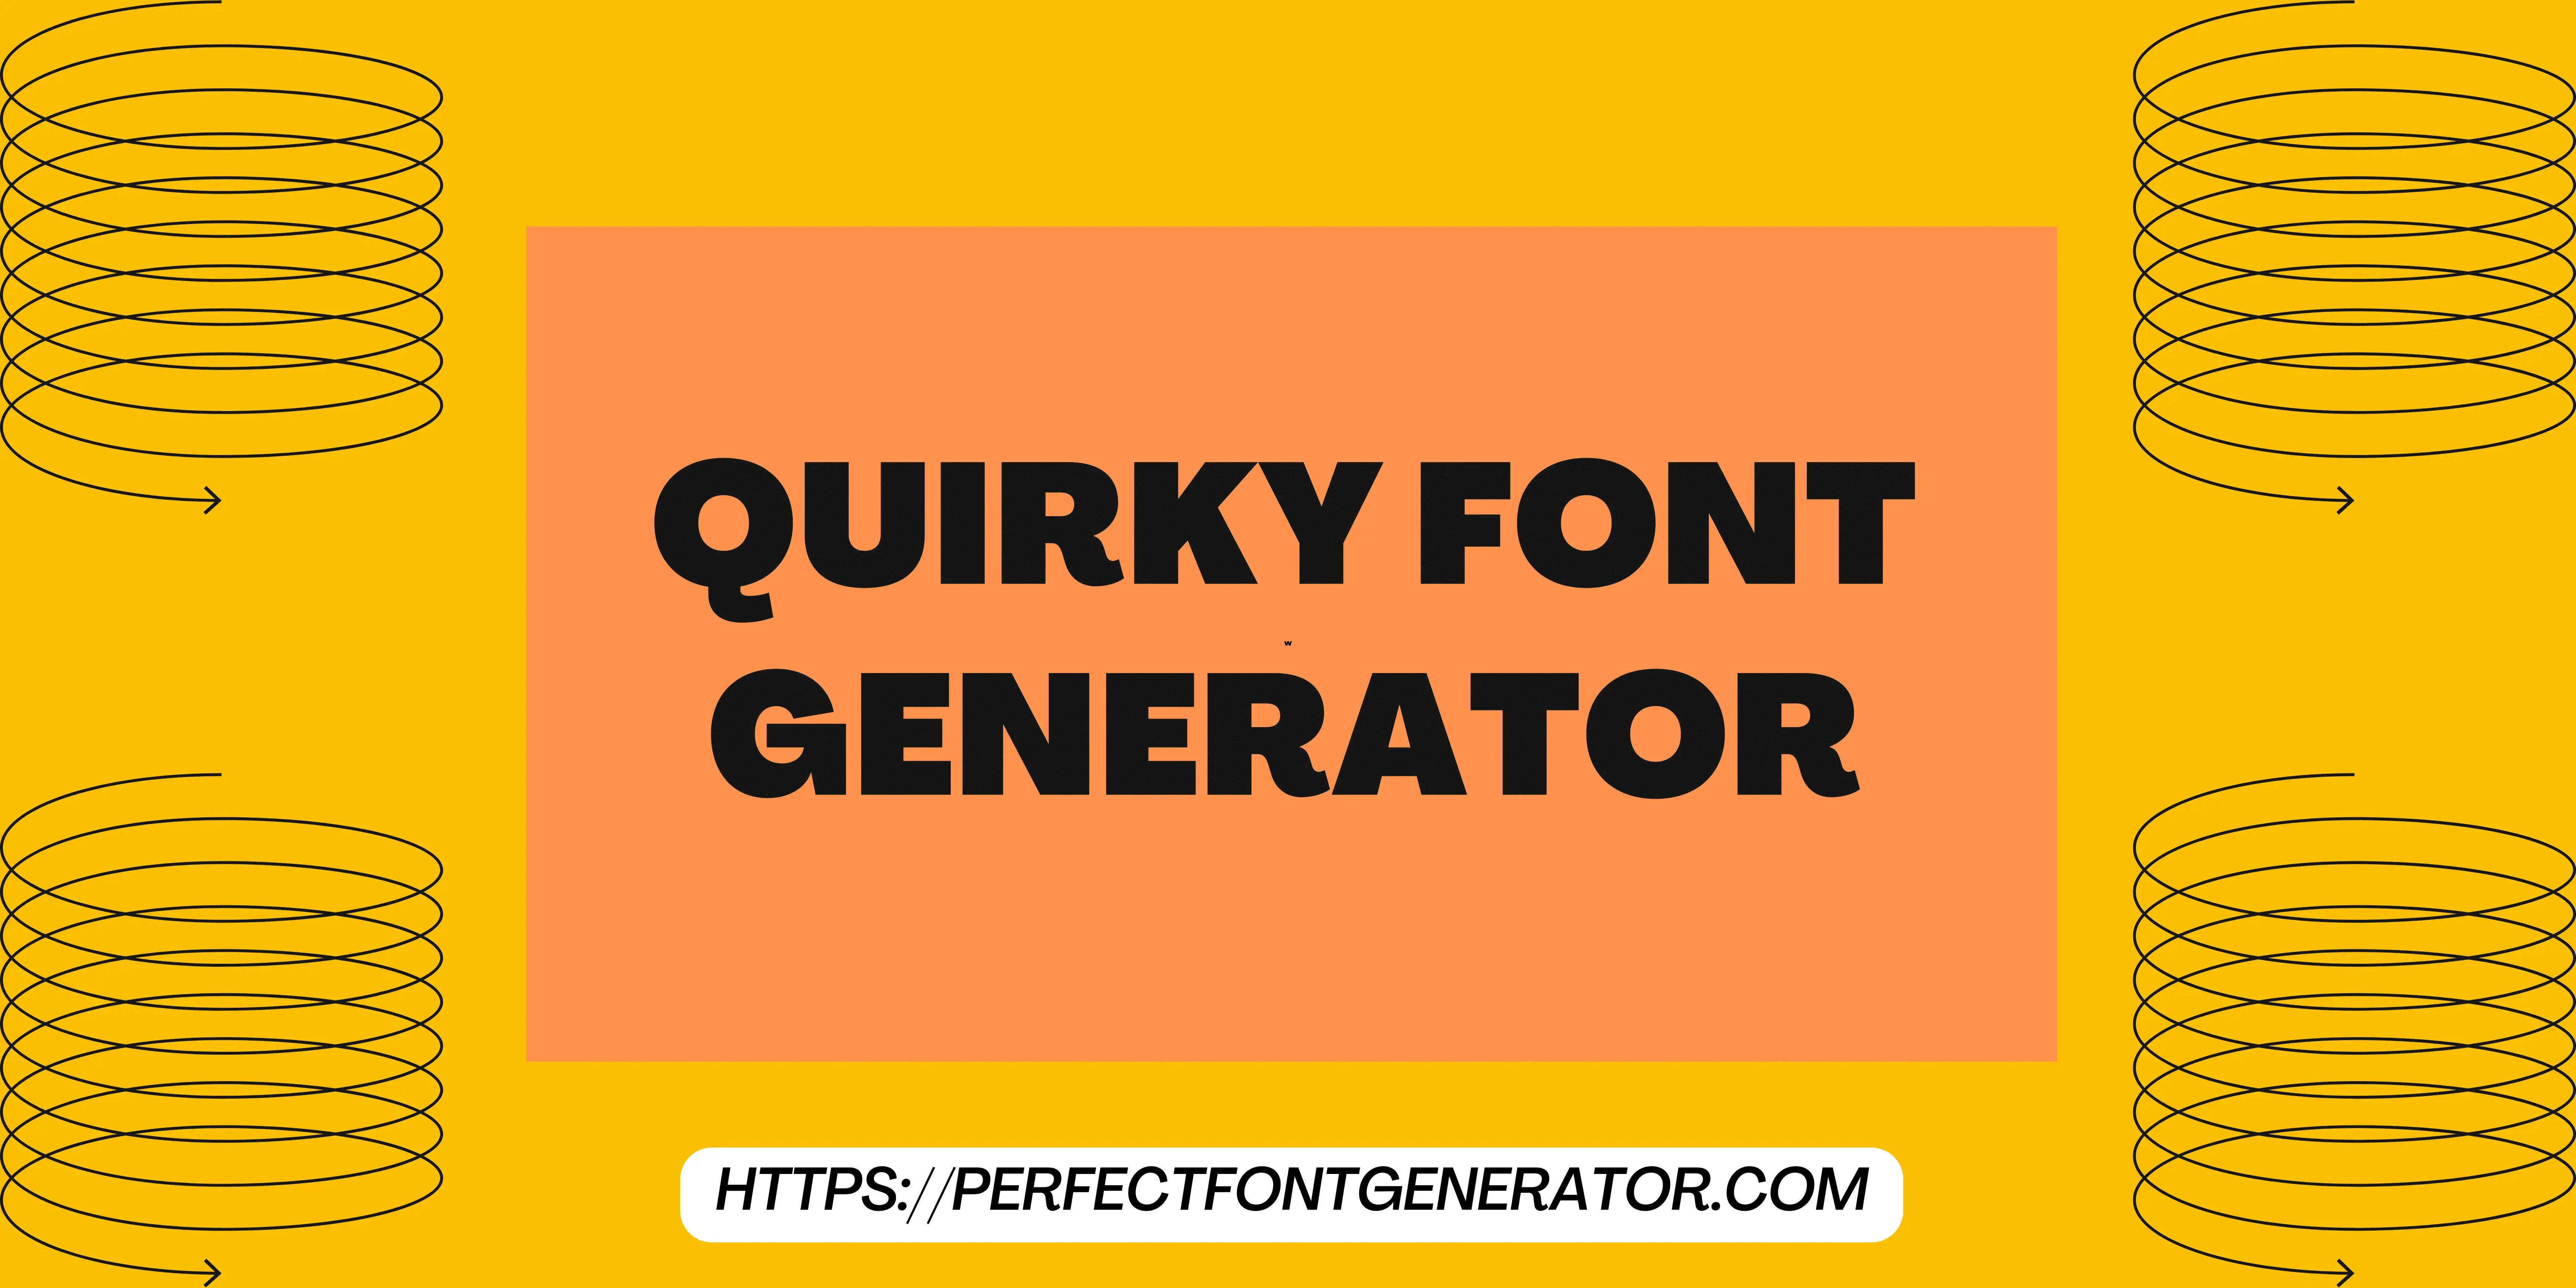 quirky font generator